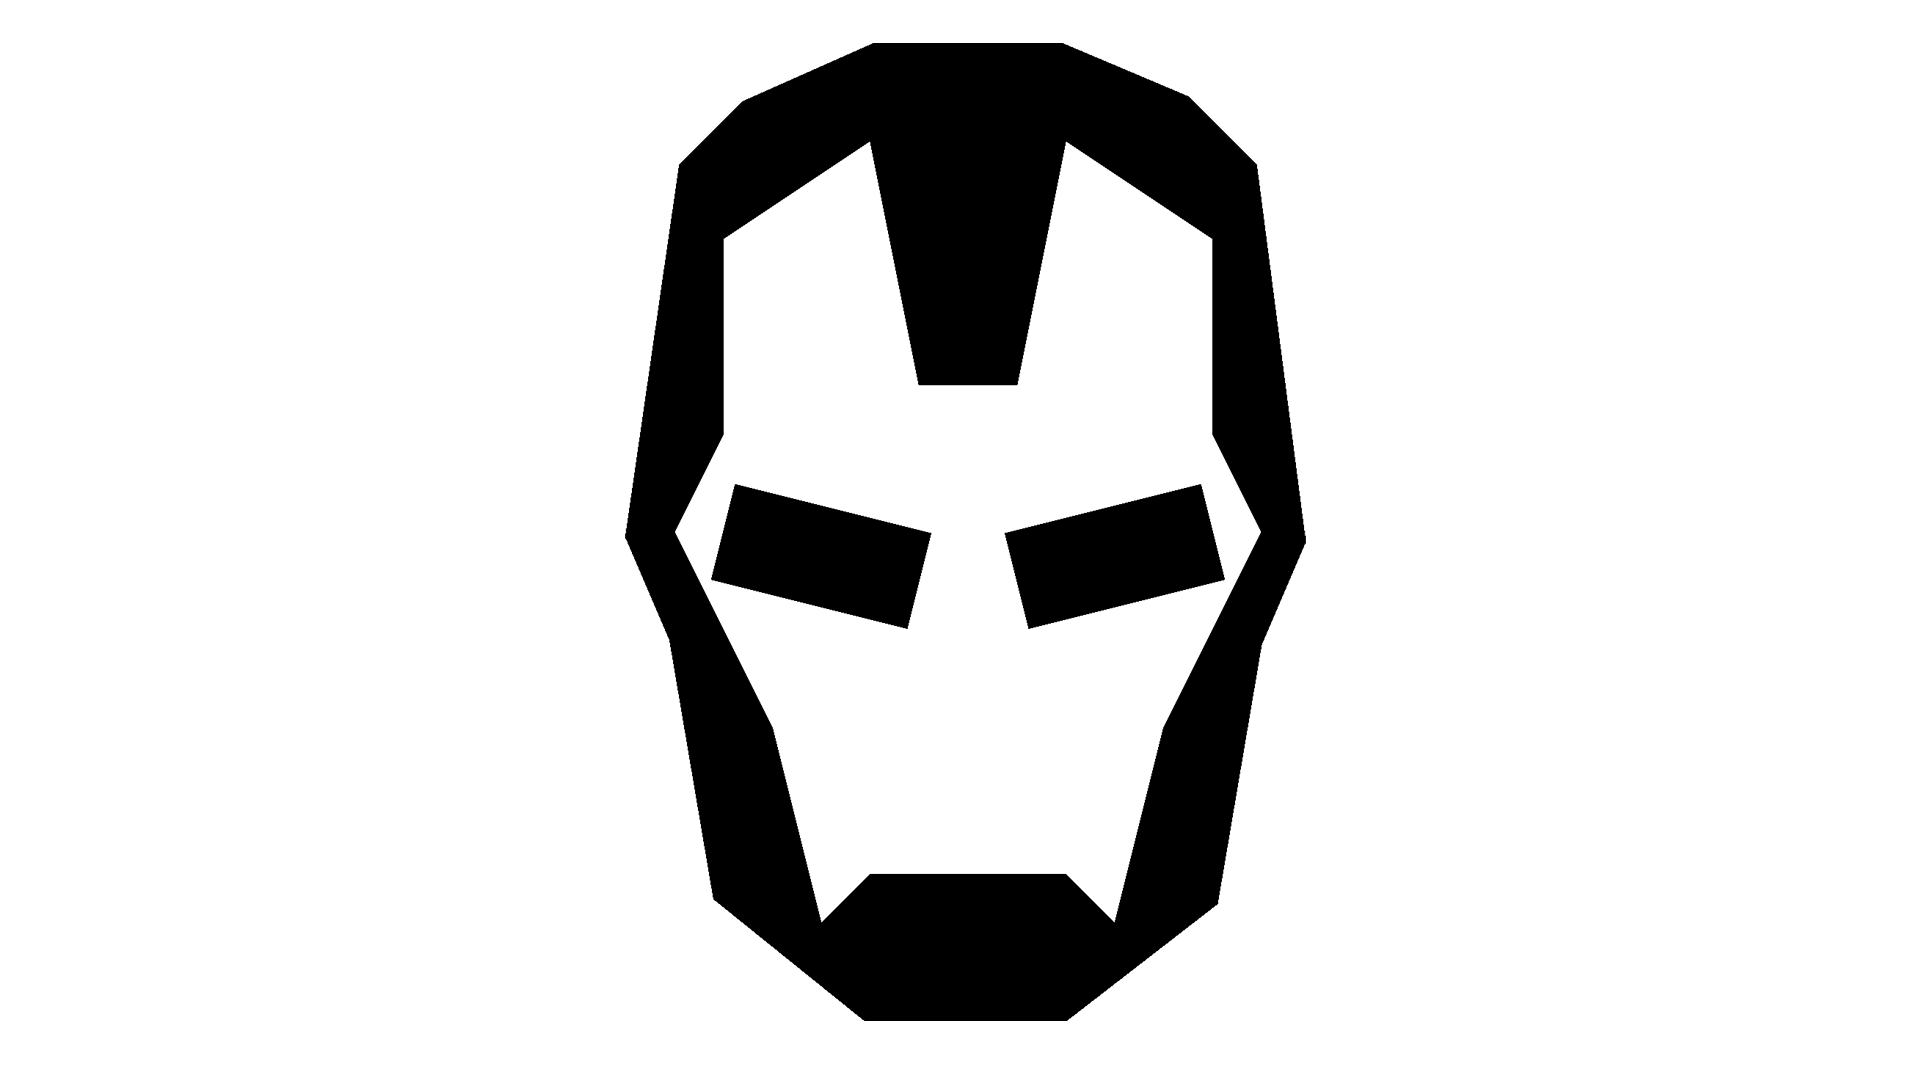 Man Logo - Iron Man Logo, Iron Man Symbol, Meaning, History and Evolution